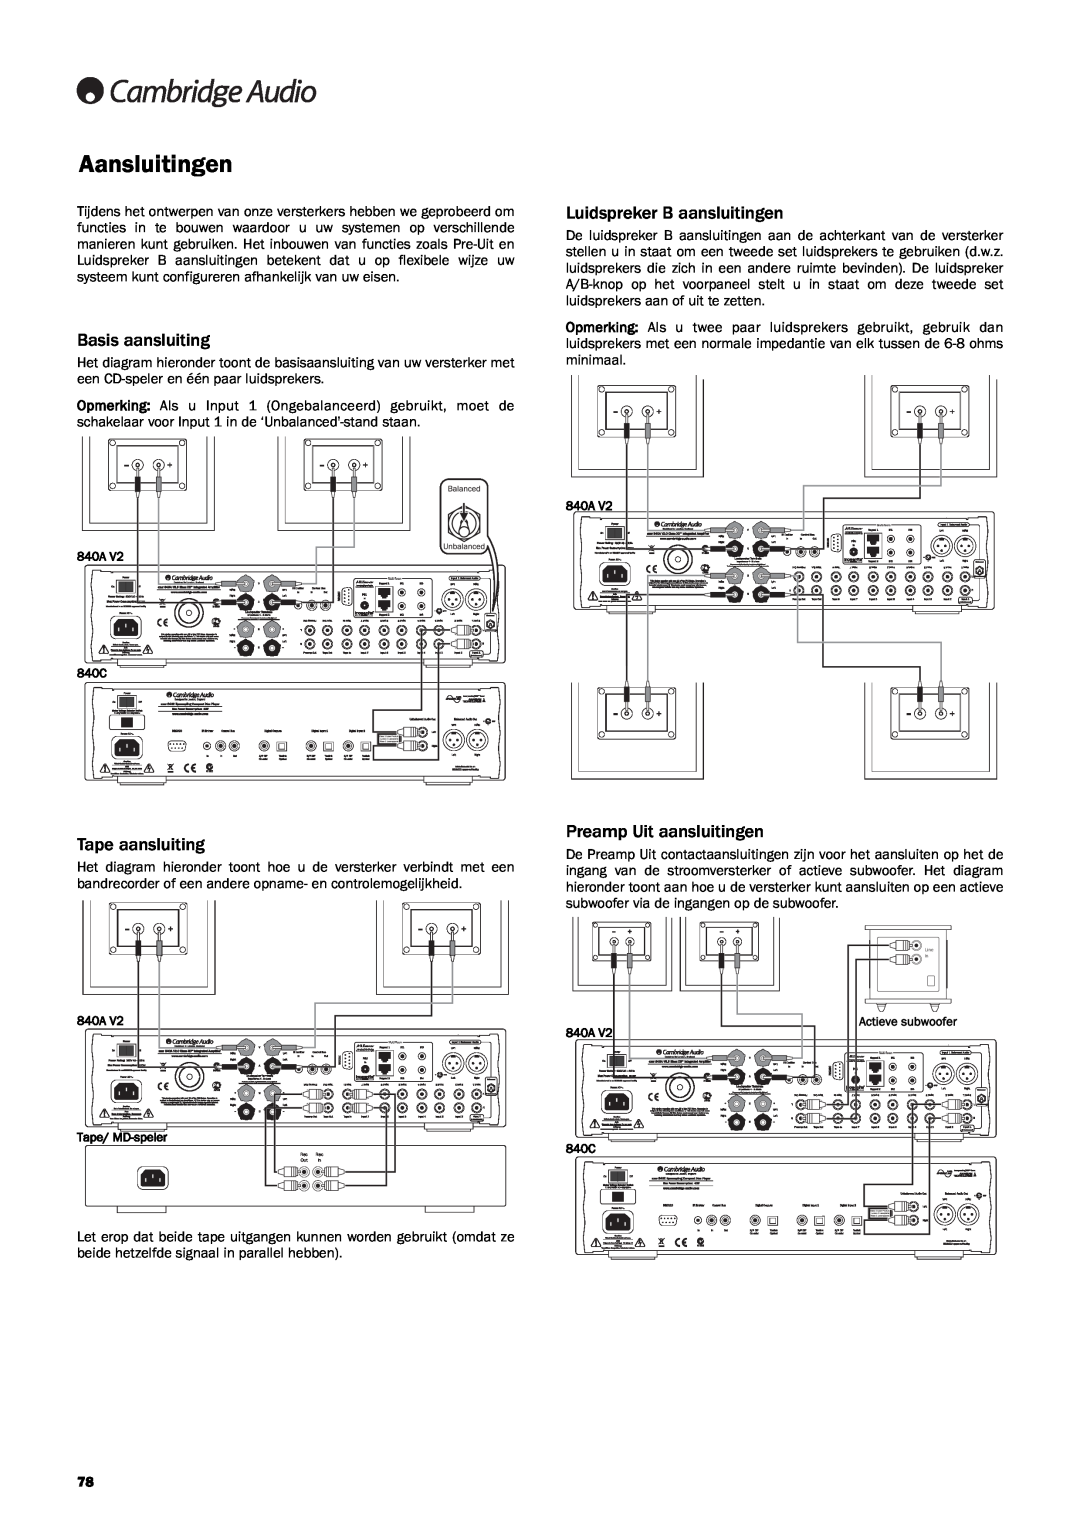 Cambridge Audio 840A V2 manual Aansluitingen, Basis aansluiting, Luidspreker B aansluitingen, Tape aansluiting 